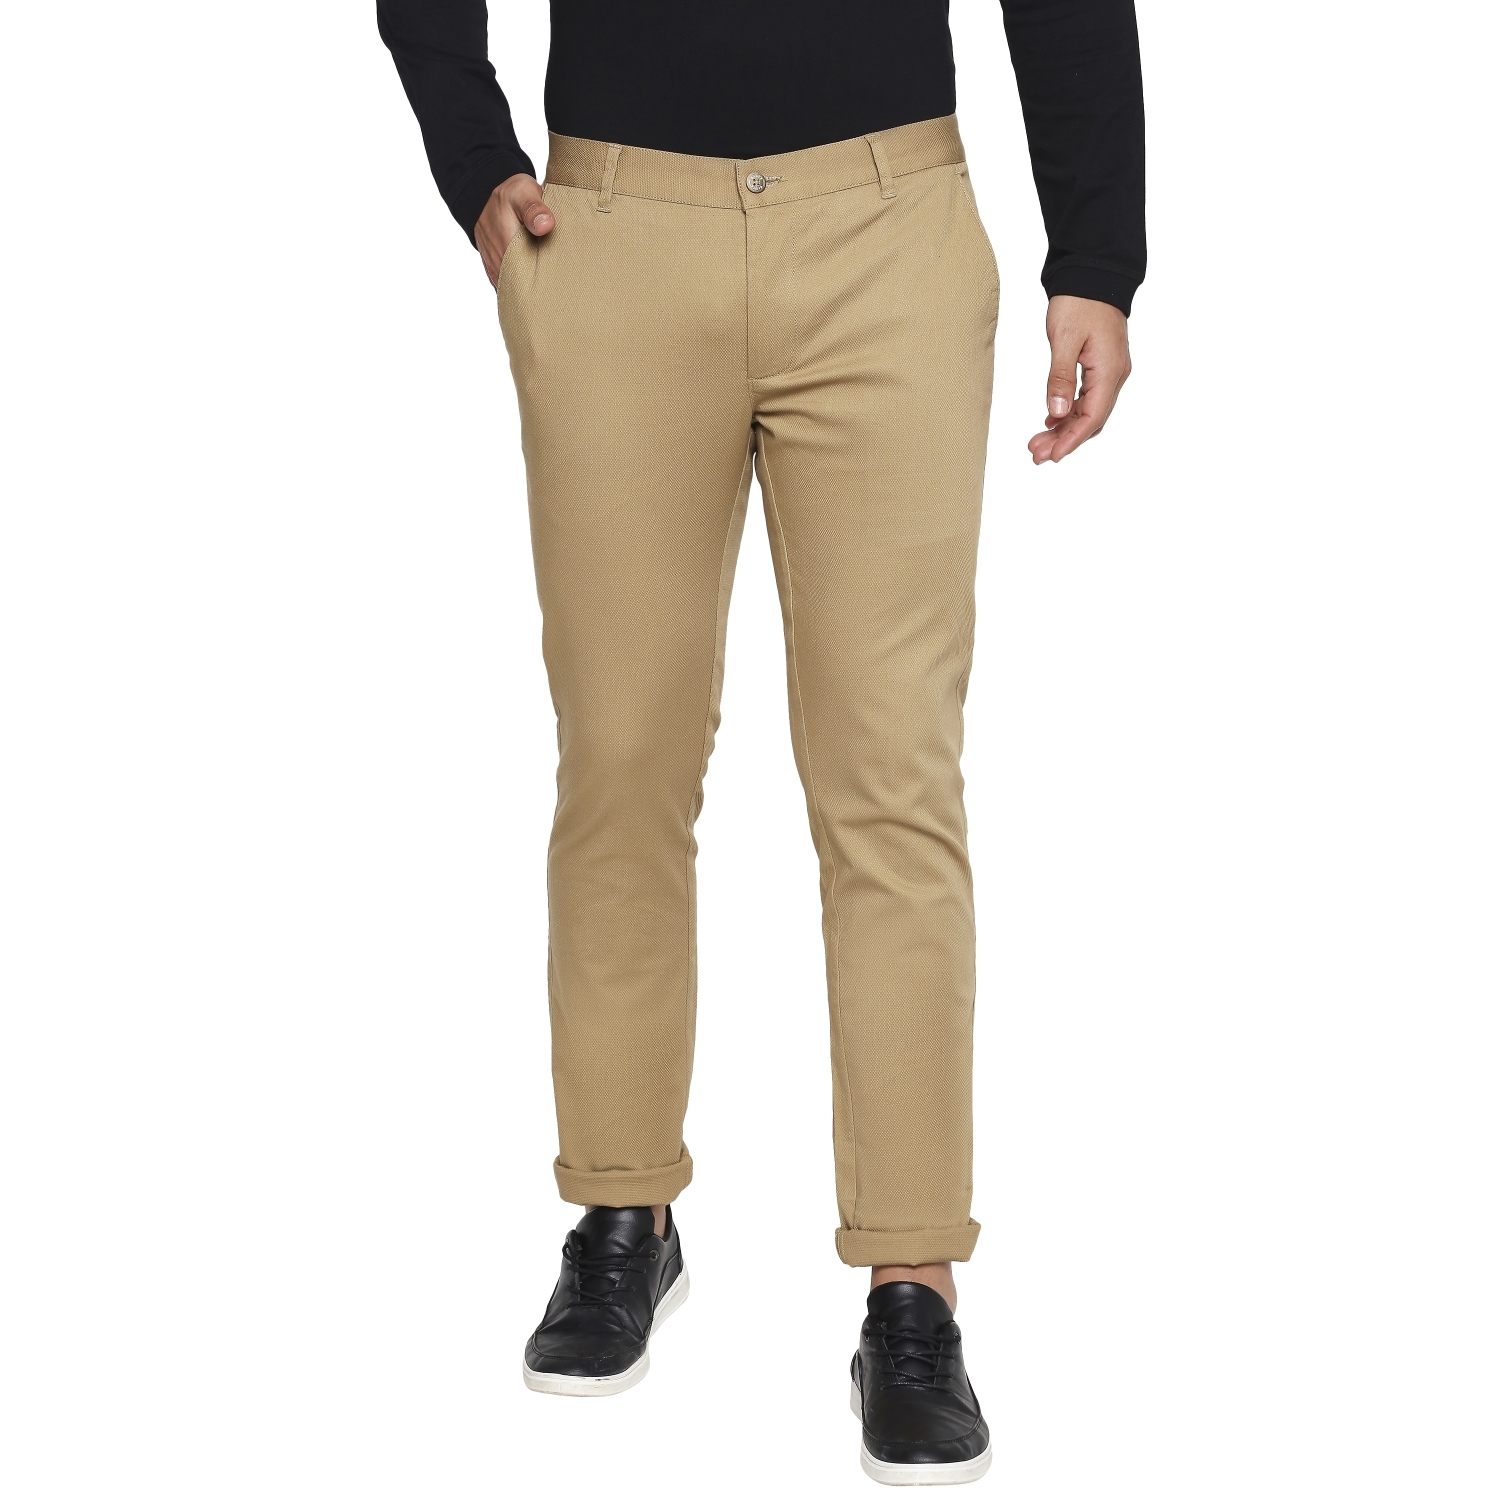 Basics | Basics Tapered Fit Bronze Khaki Stretch Trouser